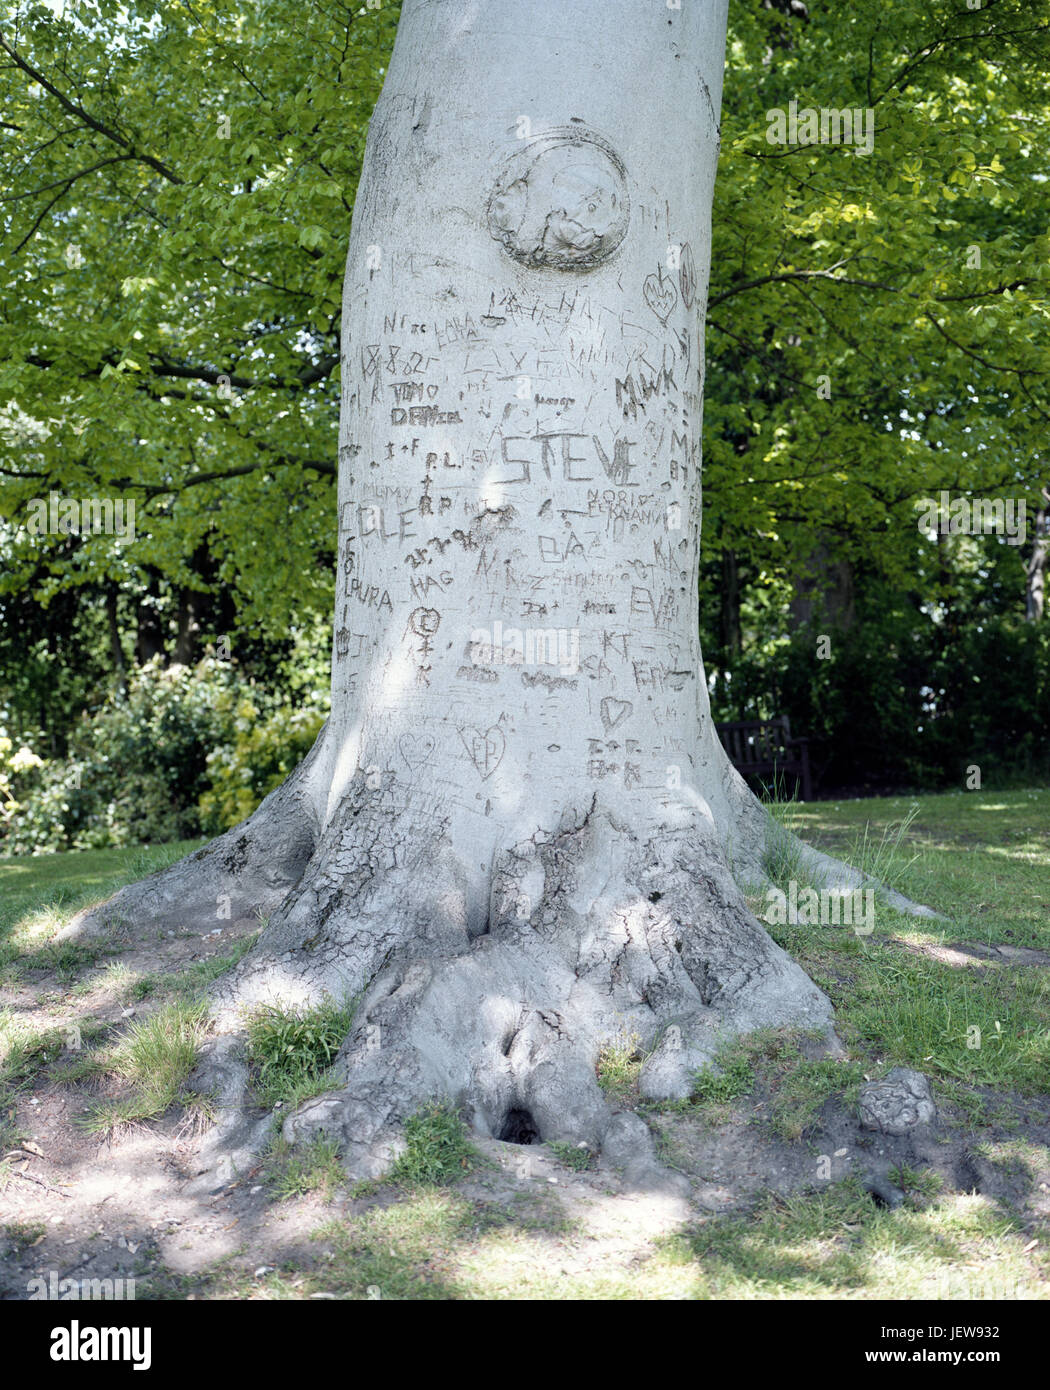 Namen Auf Baum Geschnitzt Stockfotografie Alamy